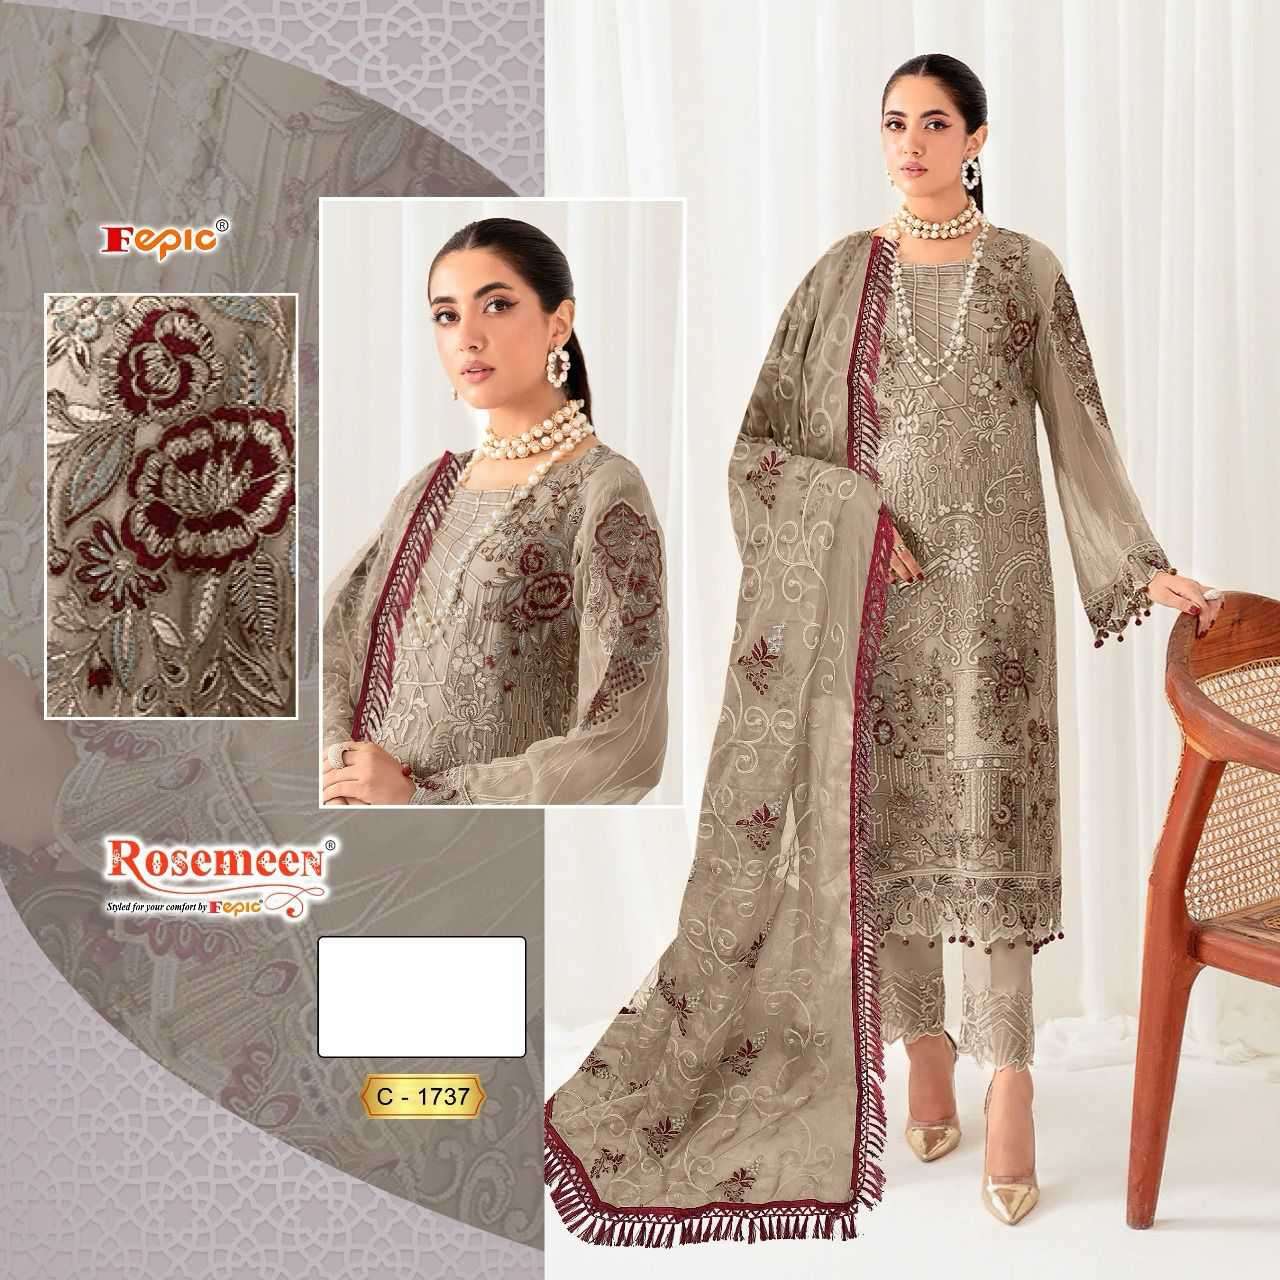 Fepic C 1737 Partywear Designer Pakistani Dress Latest Collection